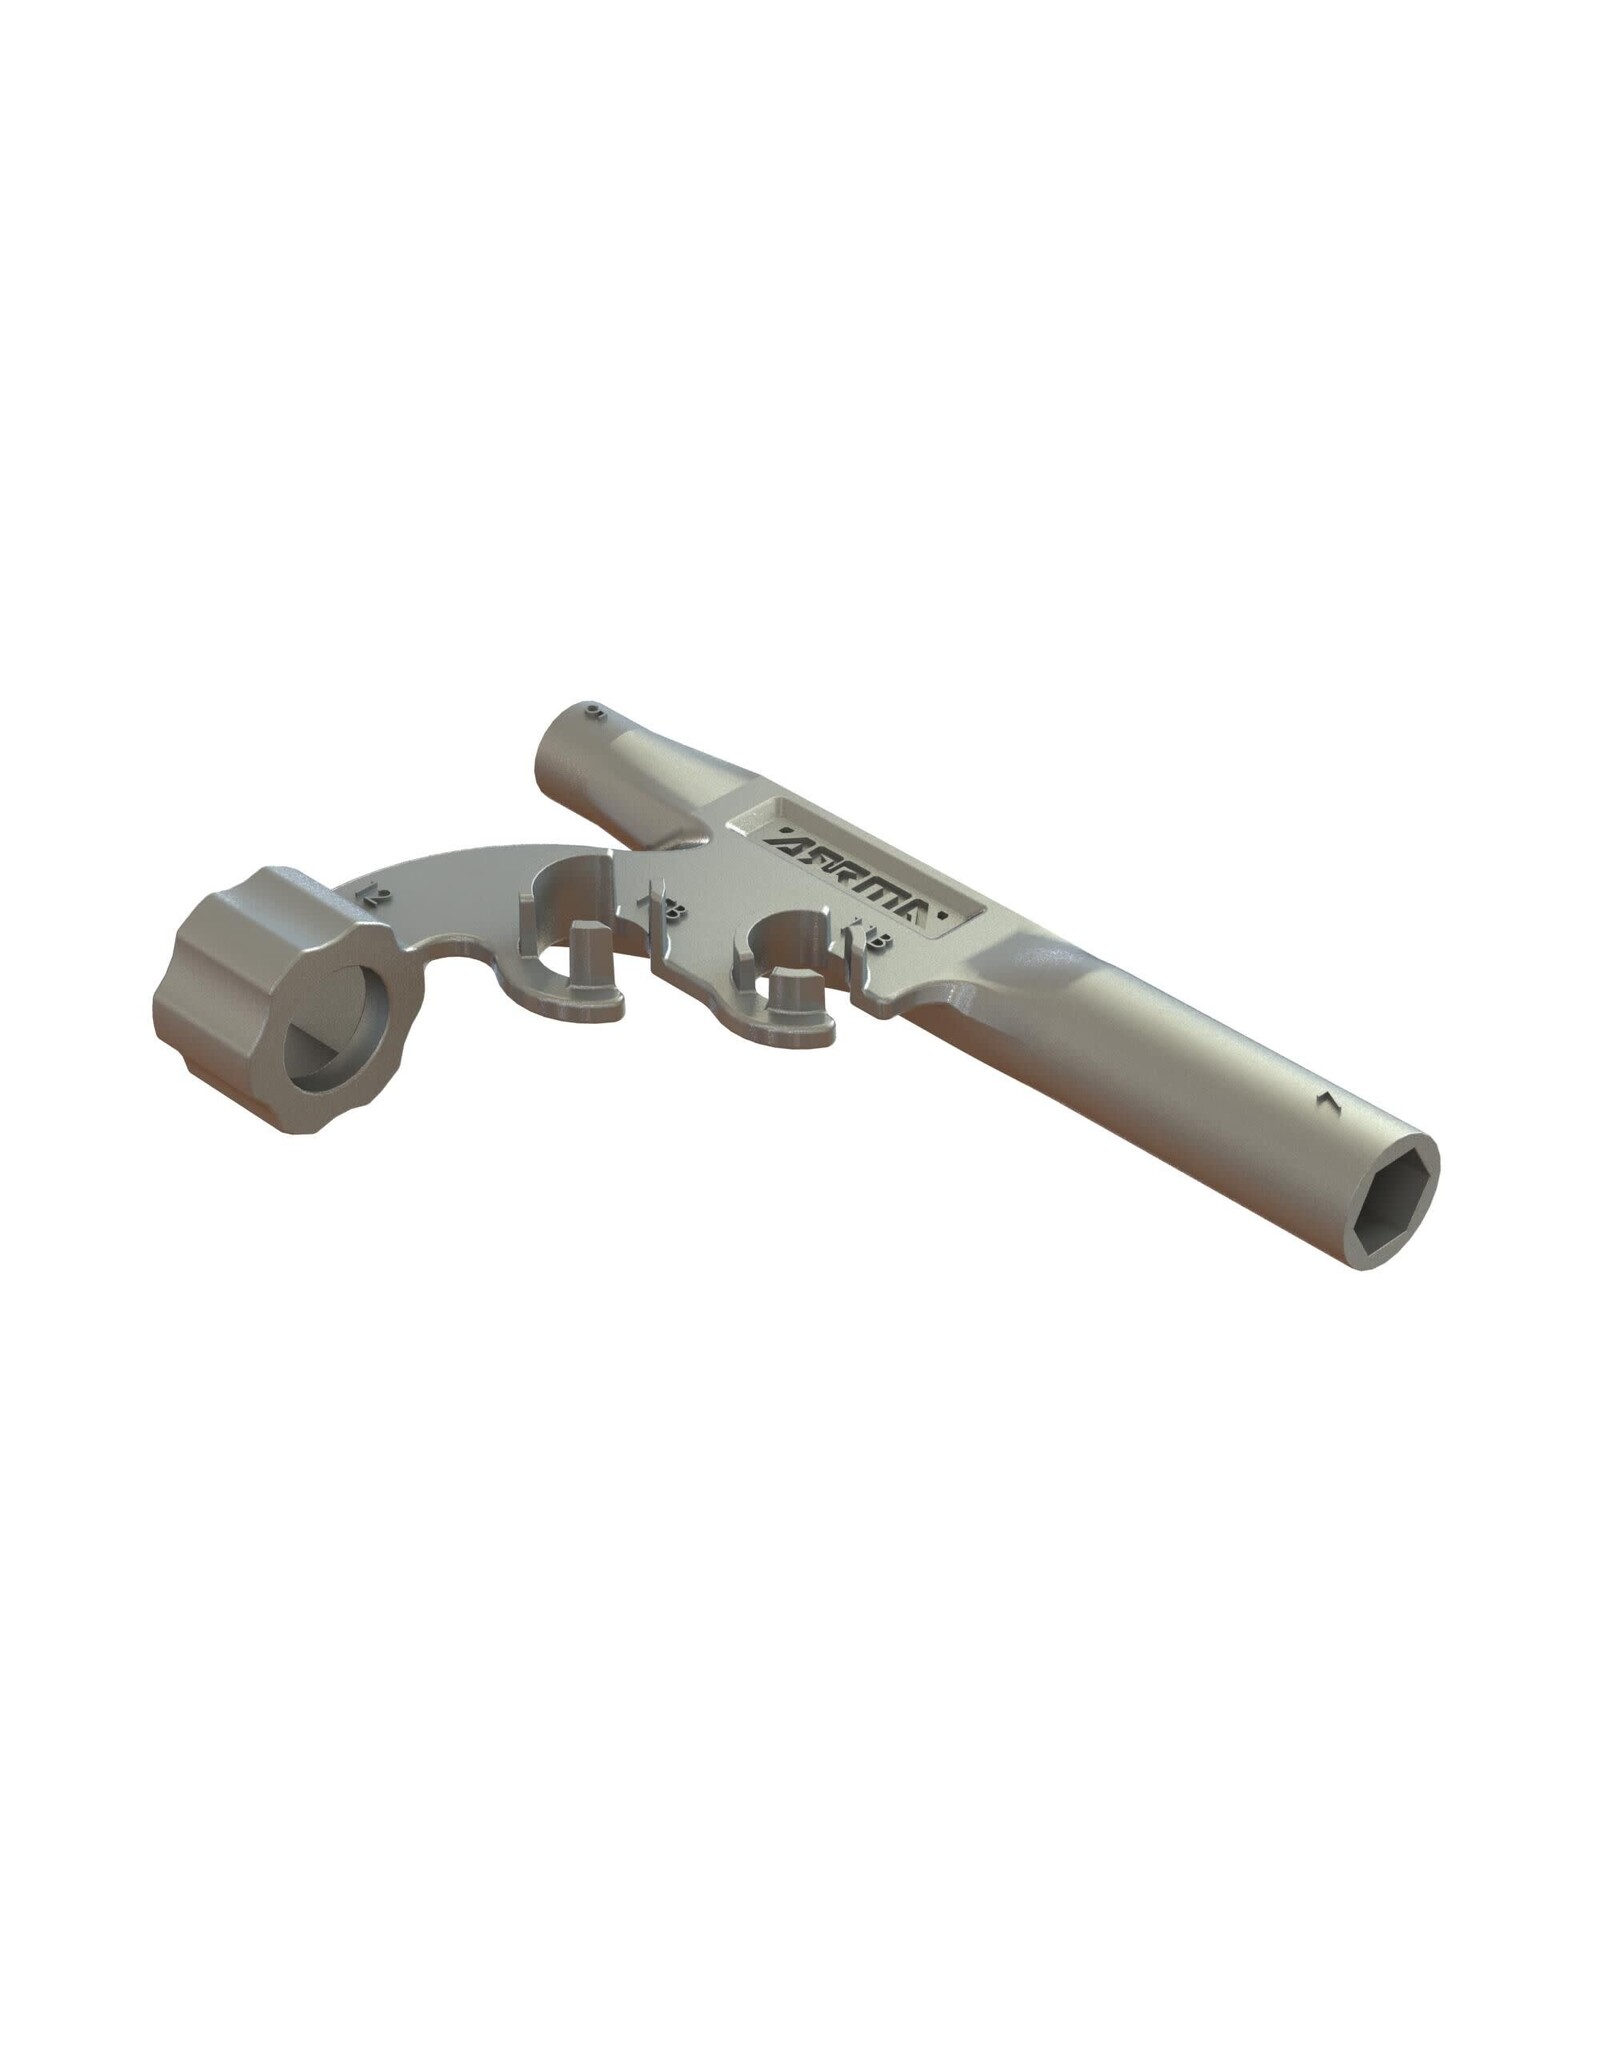 Arrma Metal Multi Tool 5/7mm Nut, 11/15mm Bore Shock